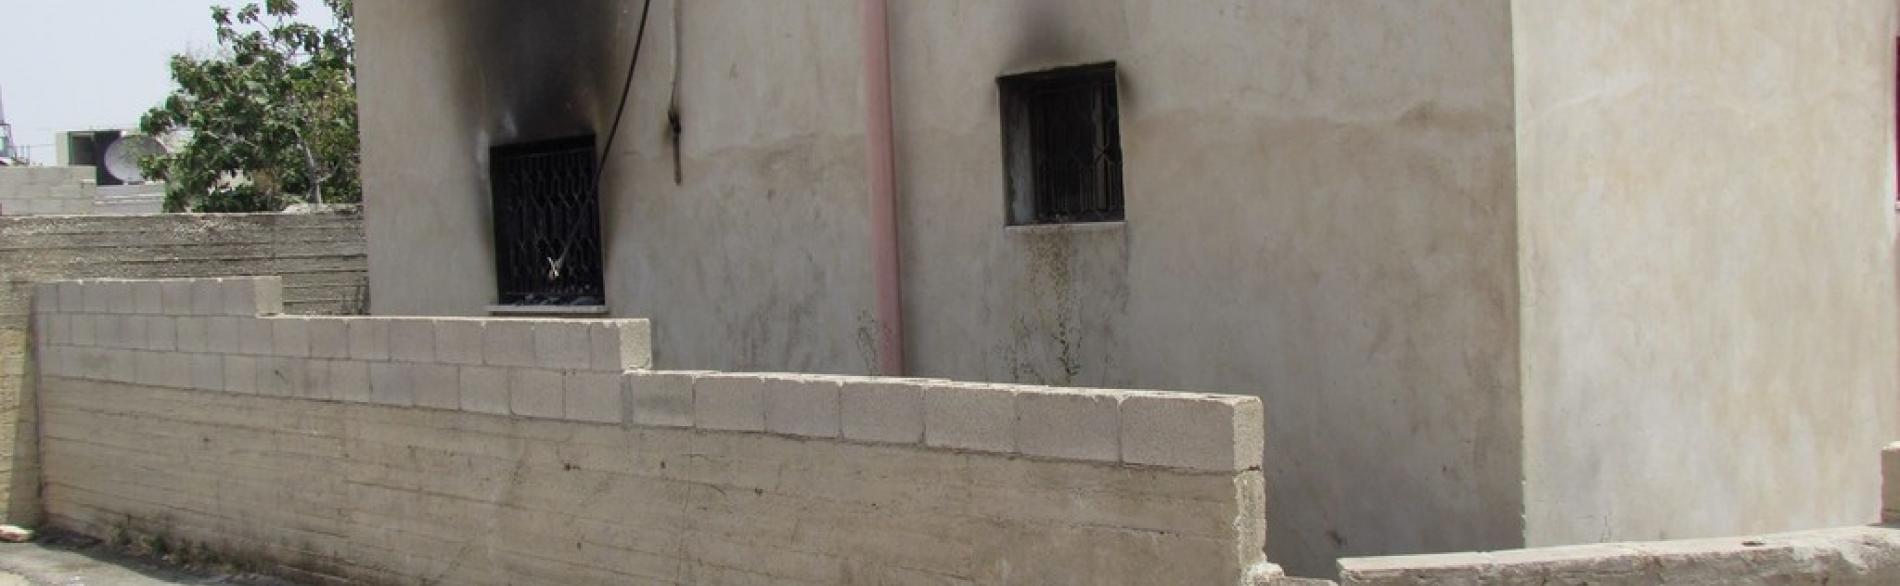 Dawabsheh family home in Duma, target of arson attack. Photo by OCHA